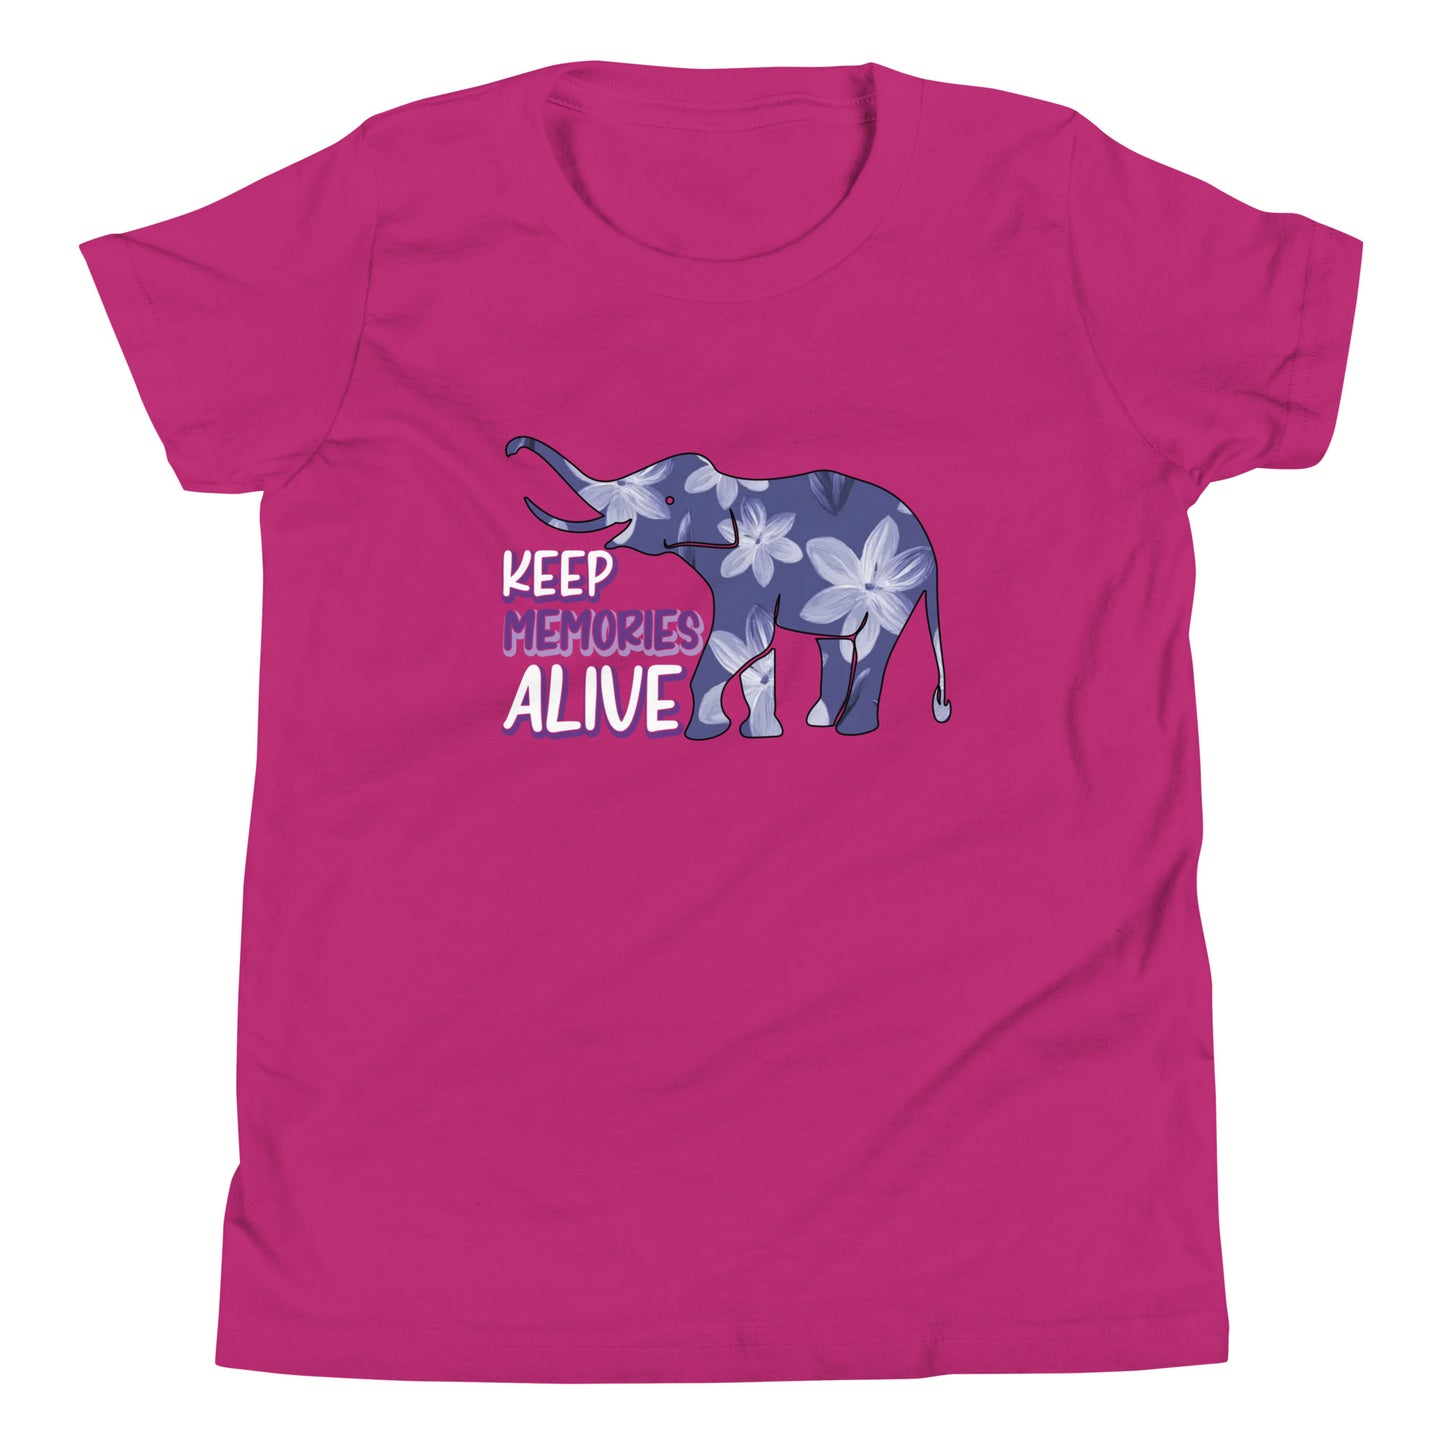 Alzheimer's Awareness Quality Cotton Bella Canvas Youth T-Shirt